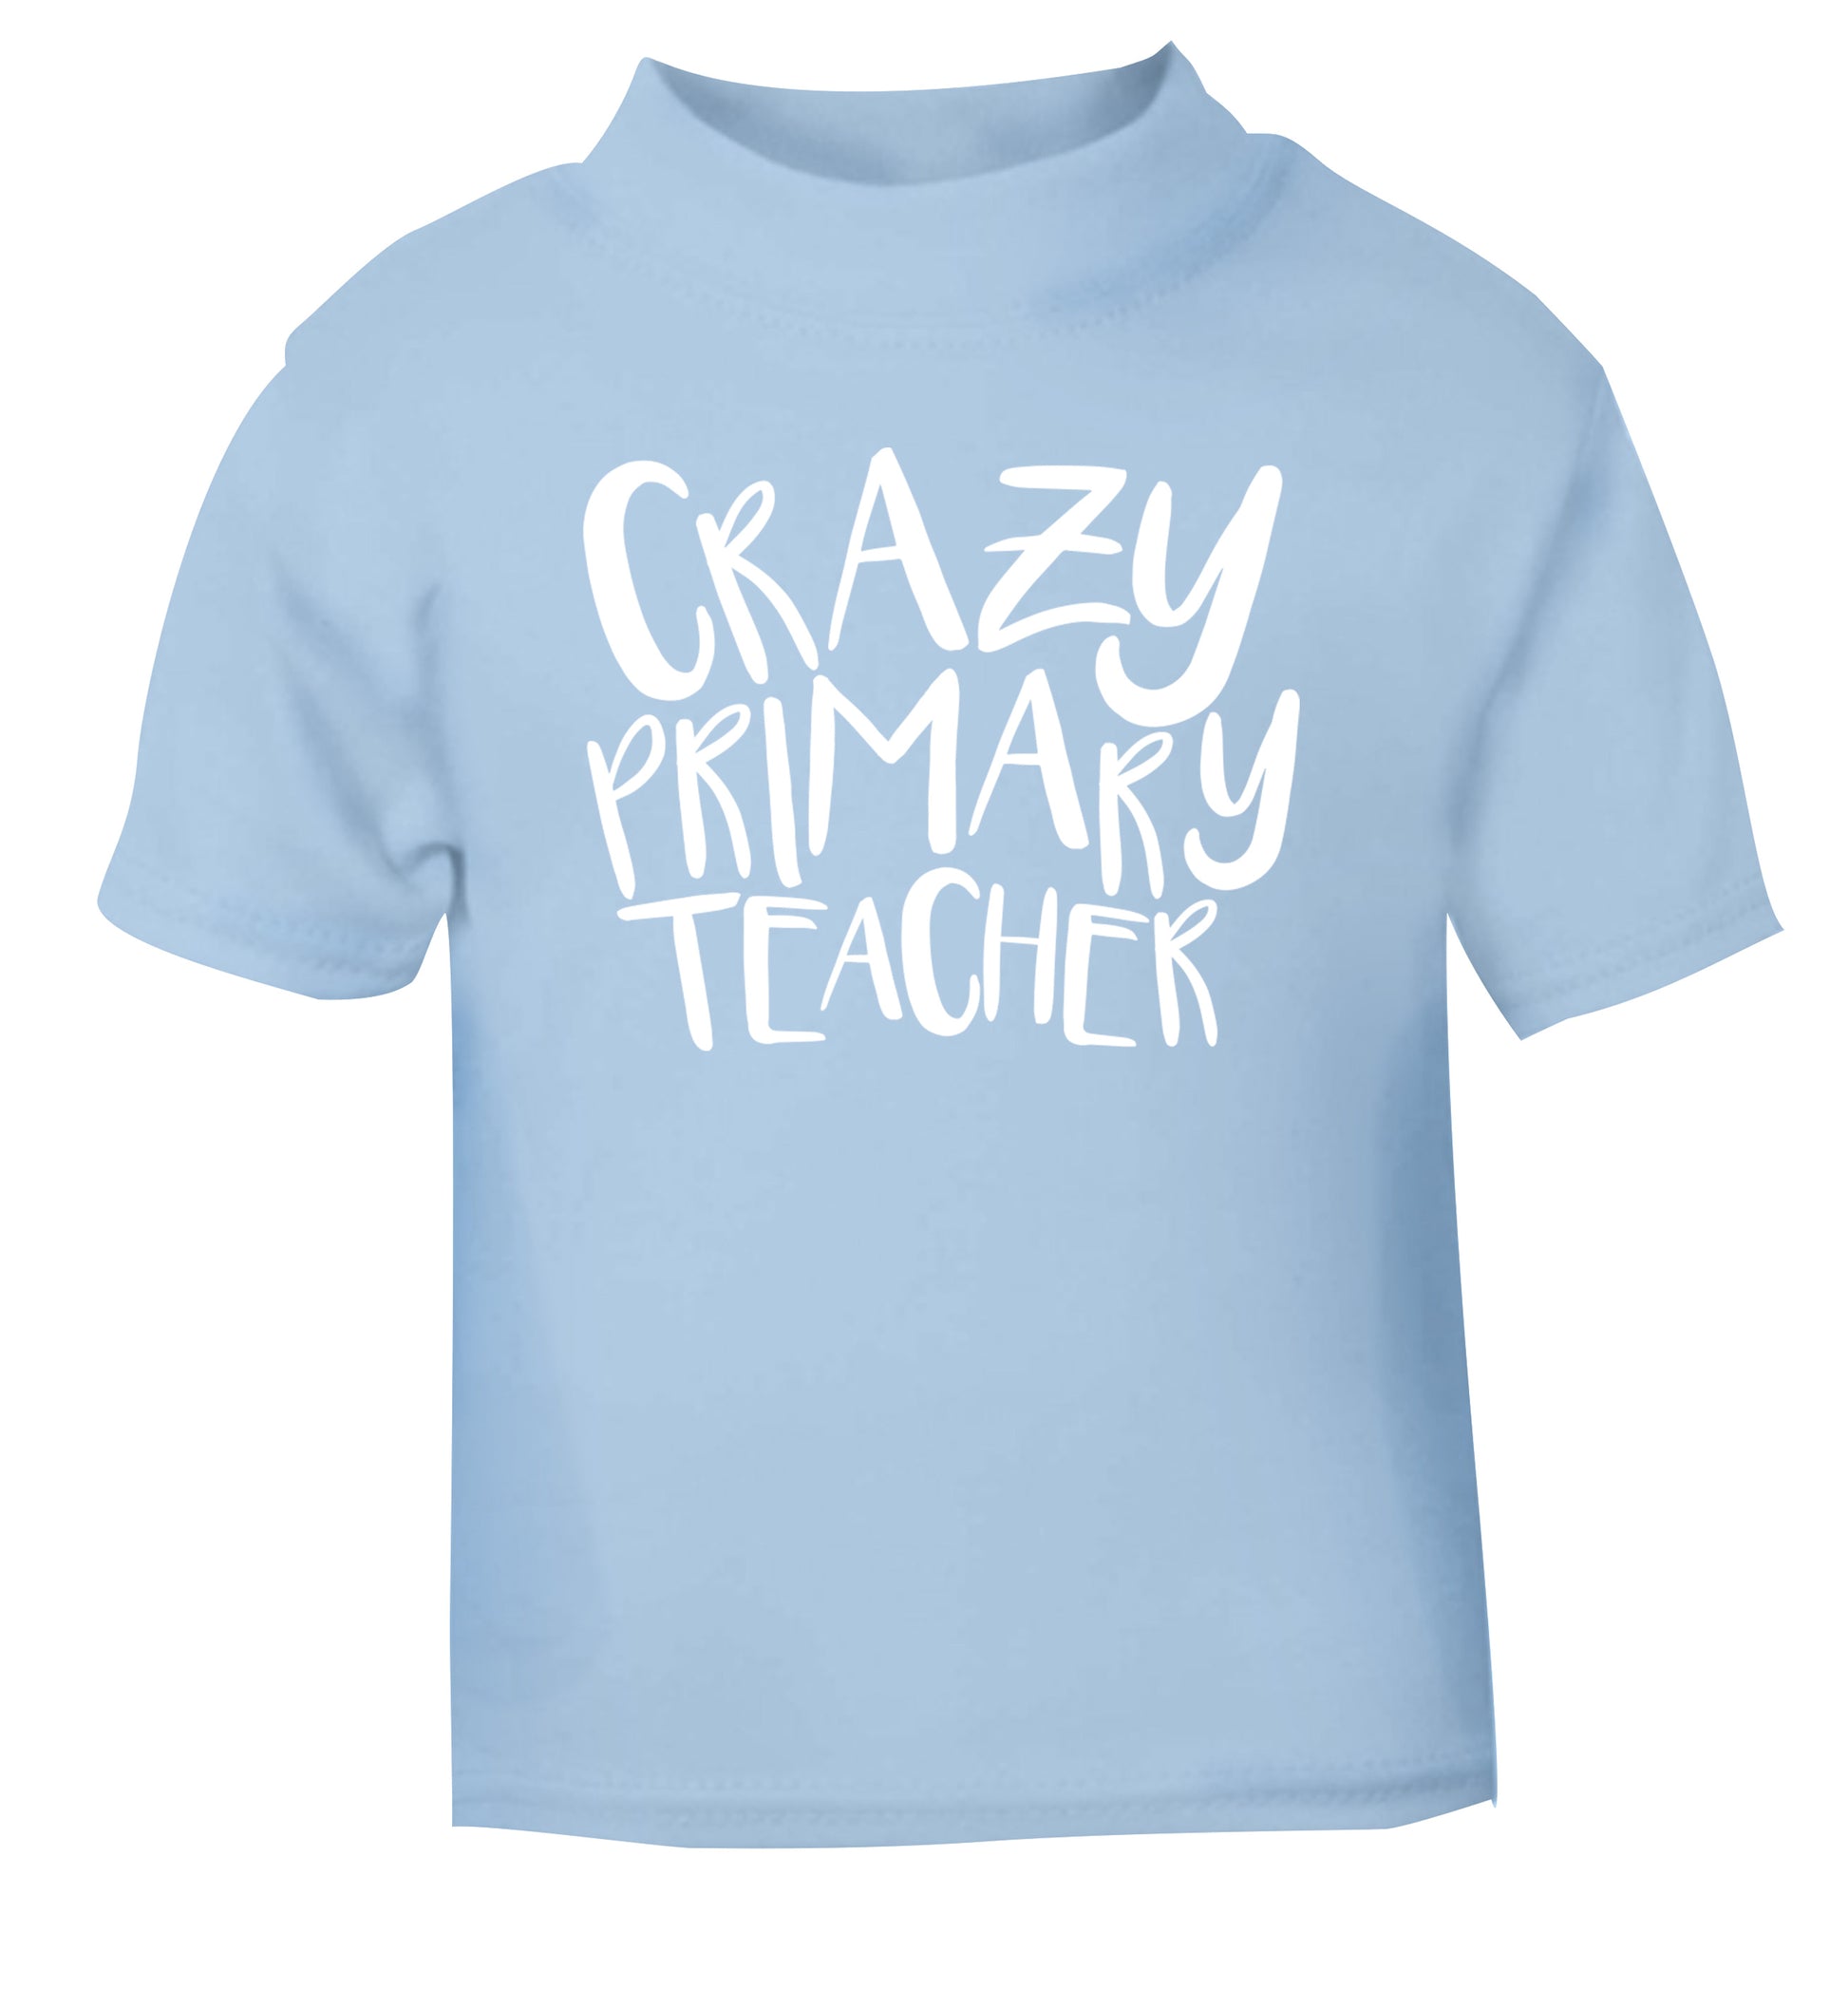 Crazy primary teacher light blue Baby Toddler Tshirt 2 Years